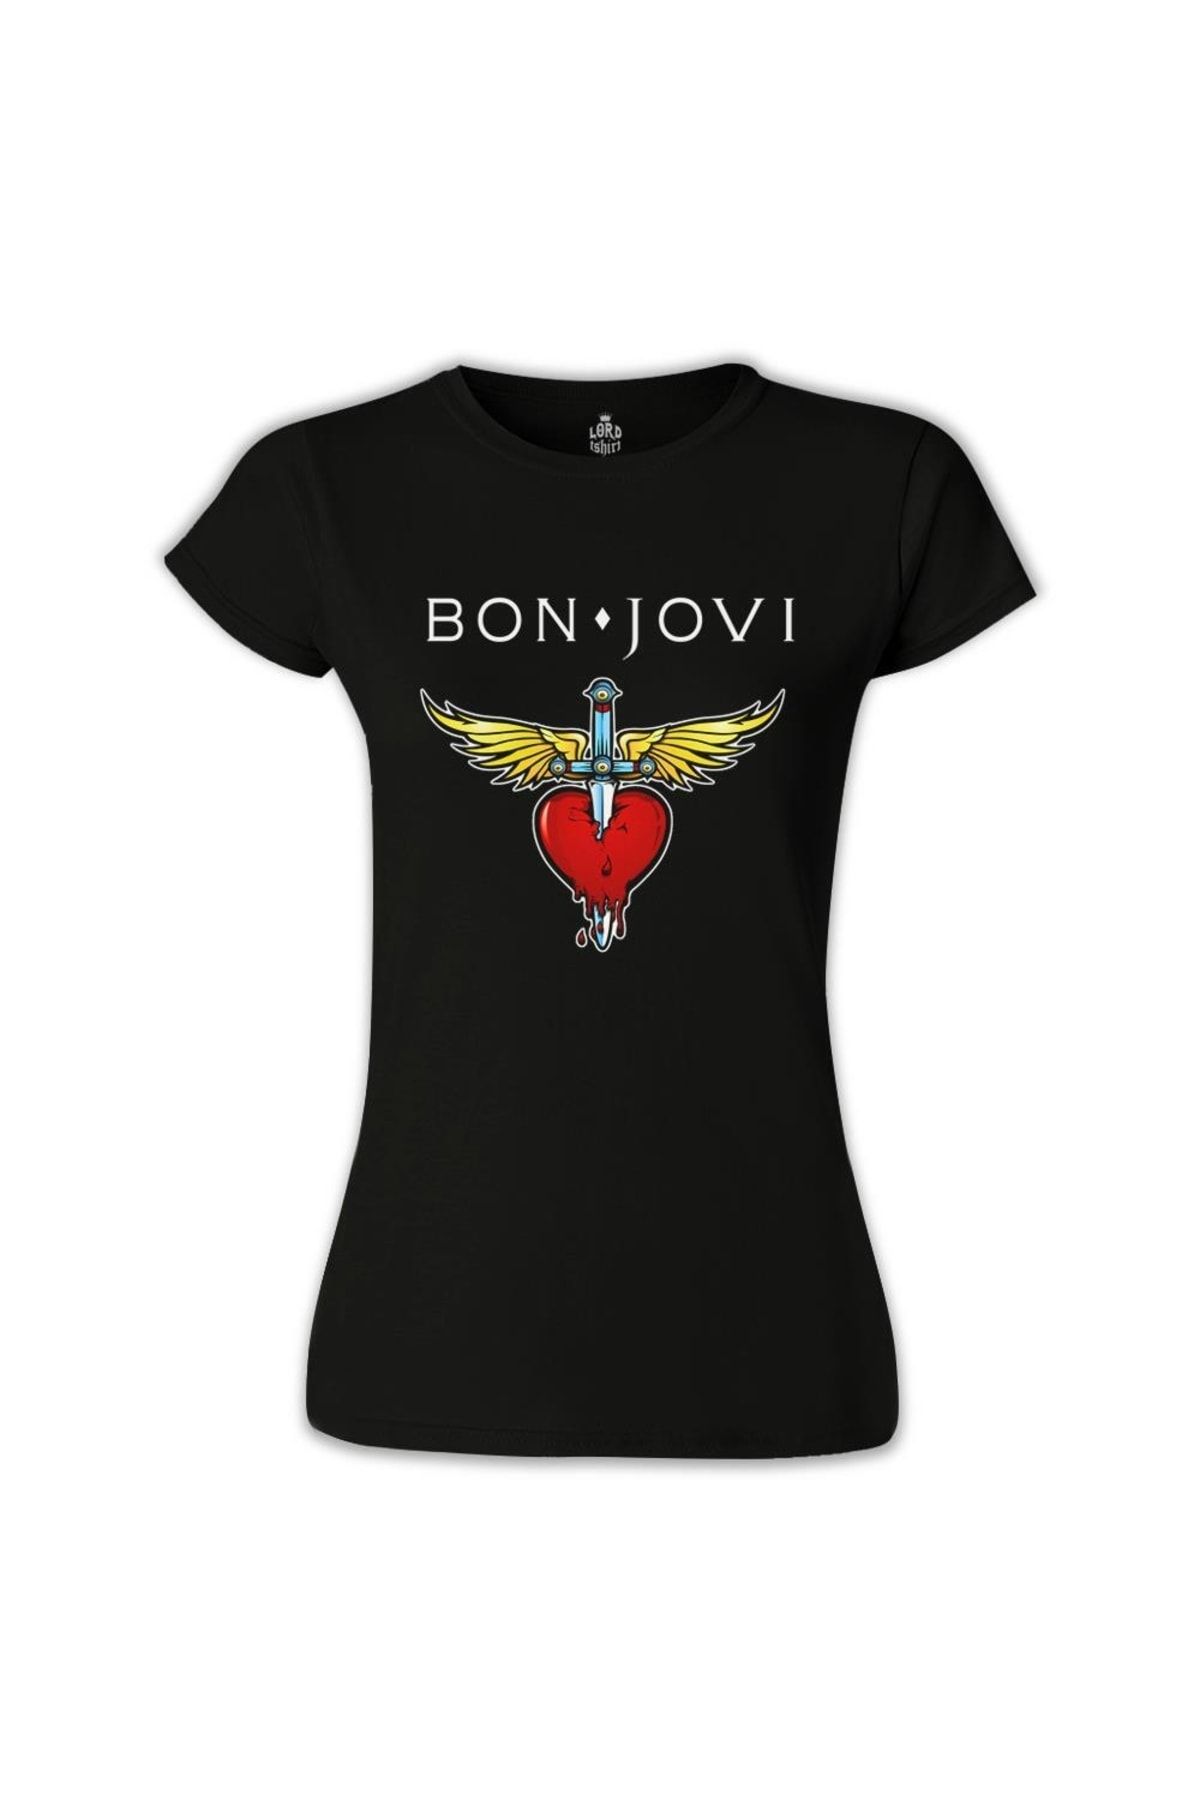 Lord T-Shirt Bon Jovi Siyah Kadın Tshirt